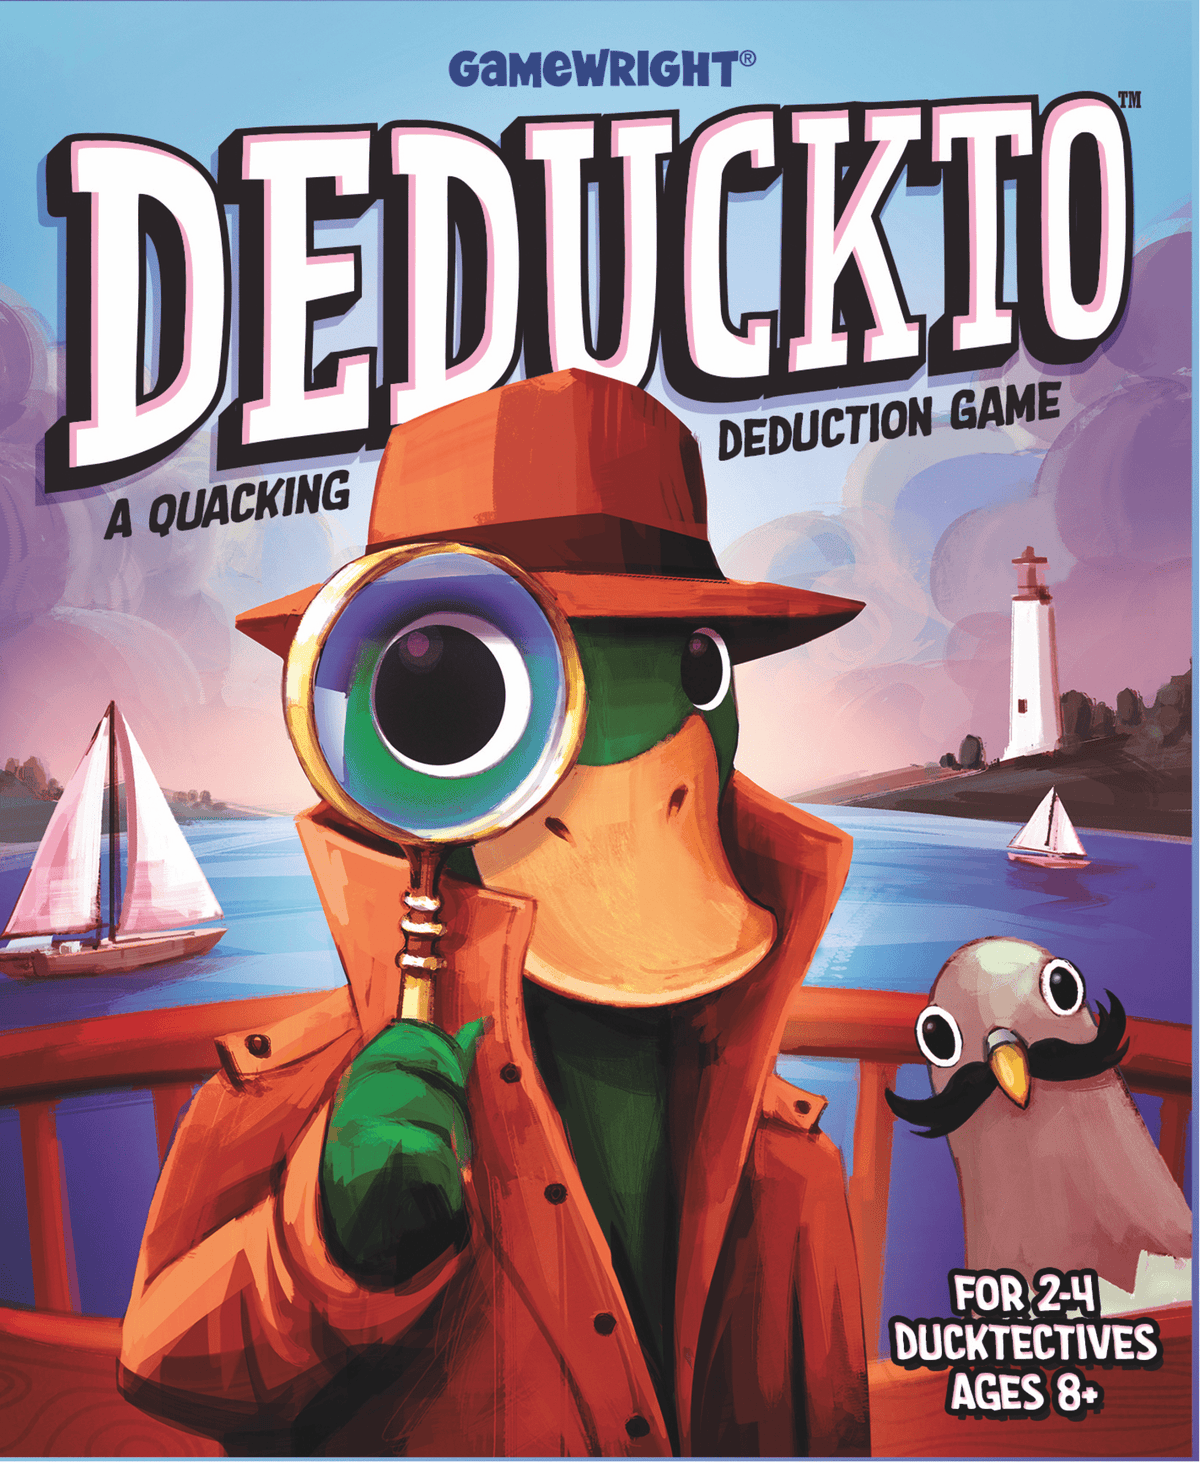 Deduckto - A Quacking Deduction Game